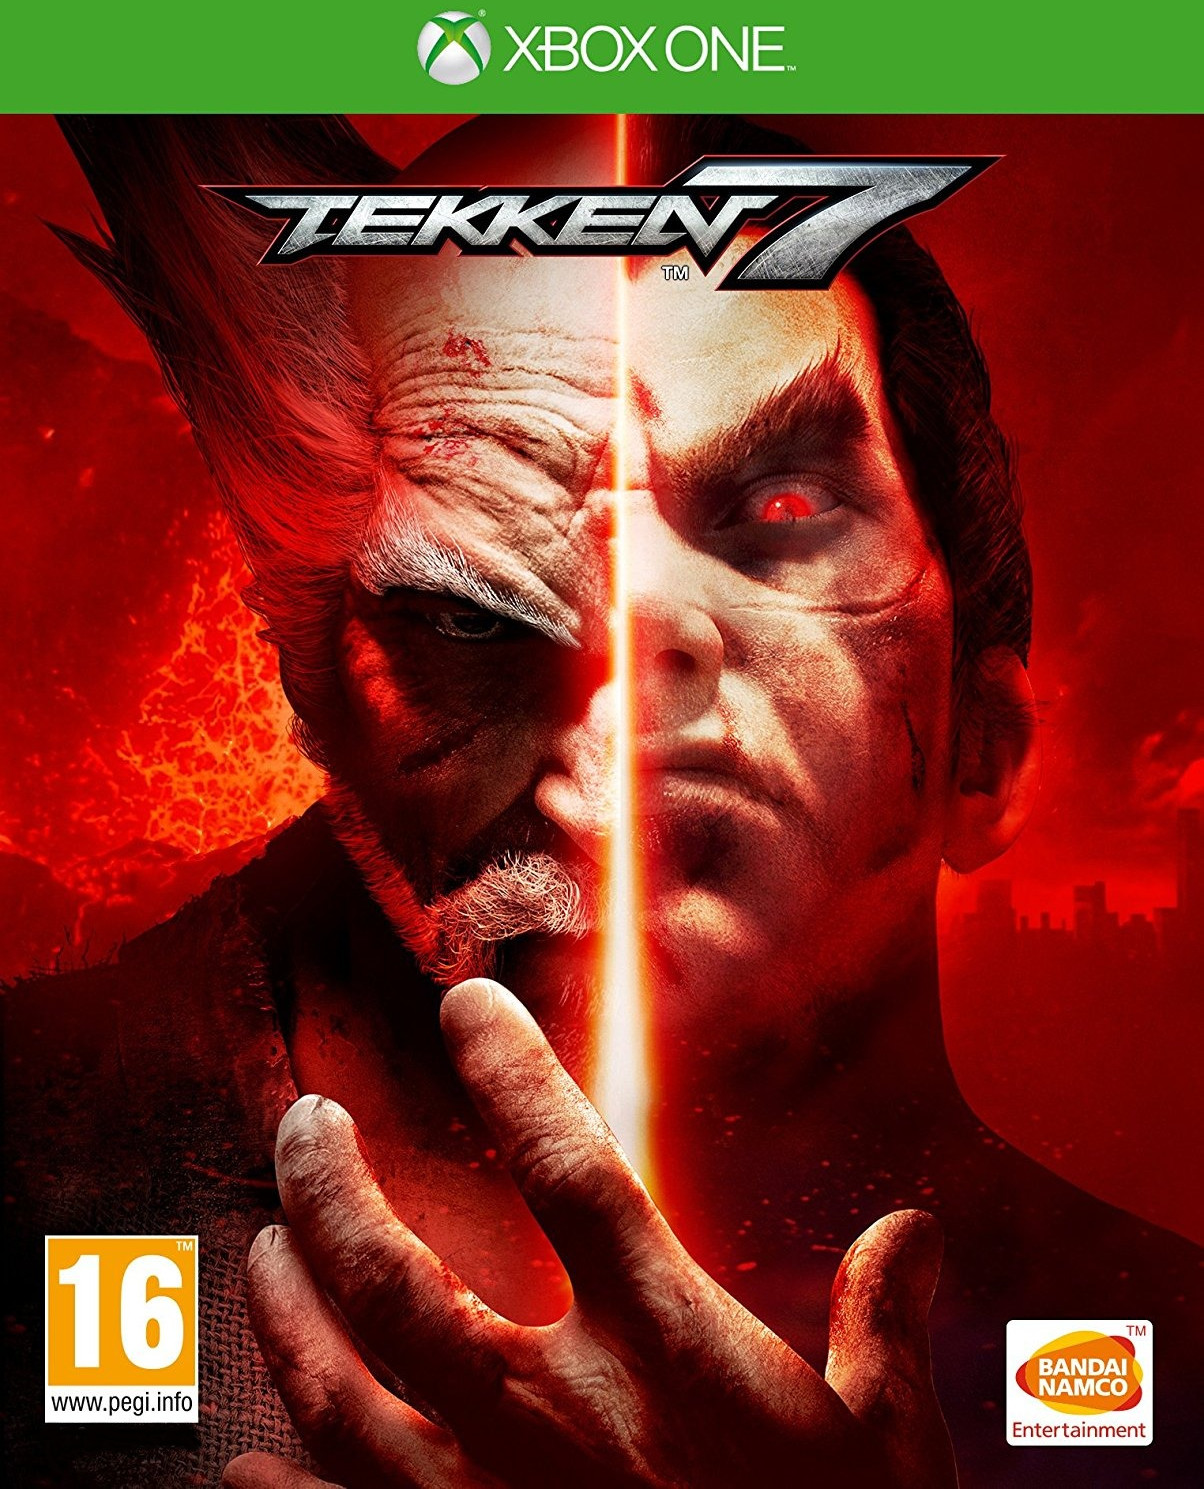 Photos - Game Bandai Namco  Tekken 7 (Xbox One)